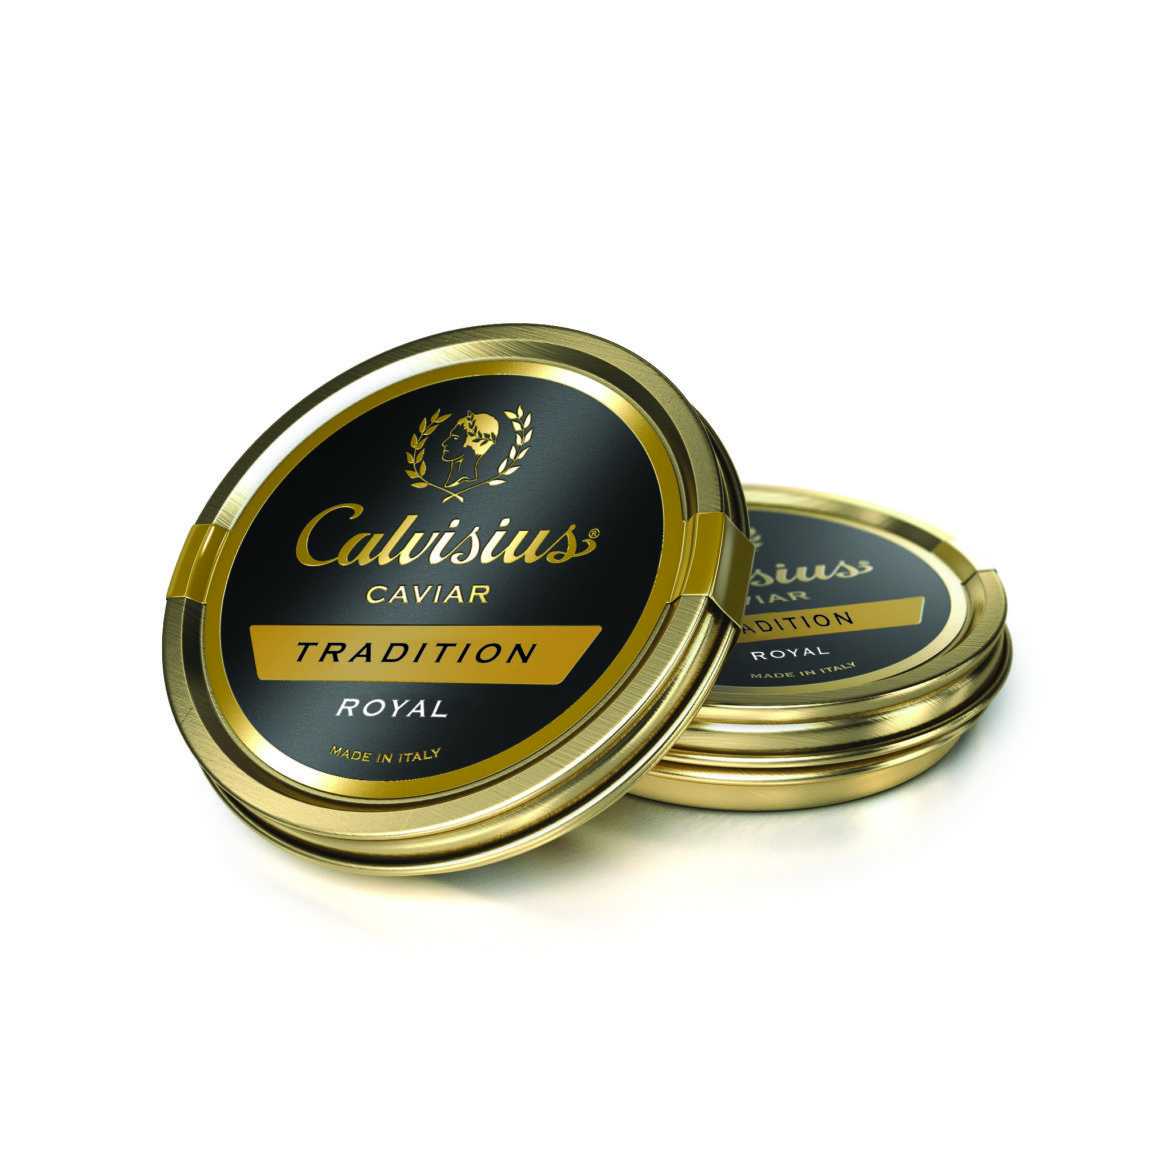 Al Merano WineFestival 2017 Calvisius Caviar protagonista della GourmetArena